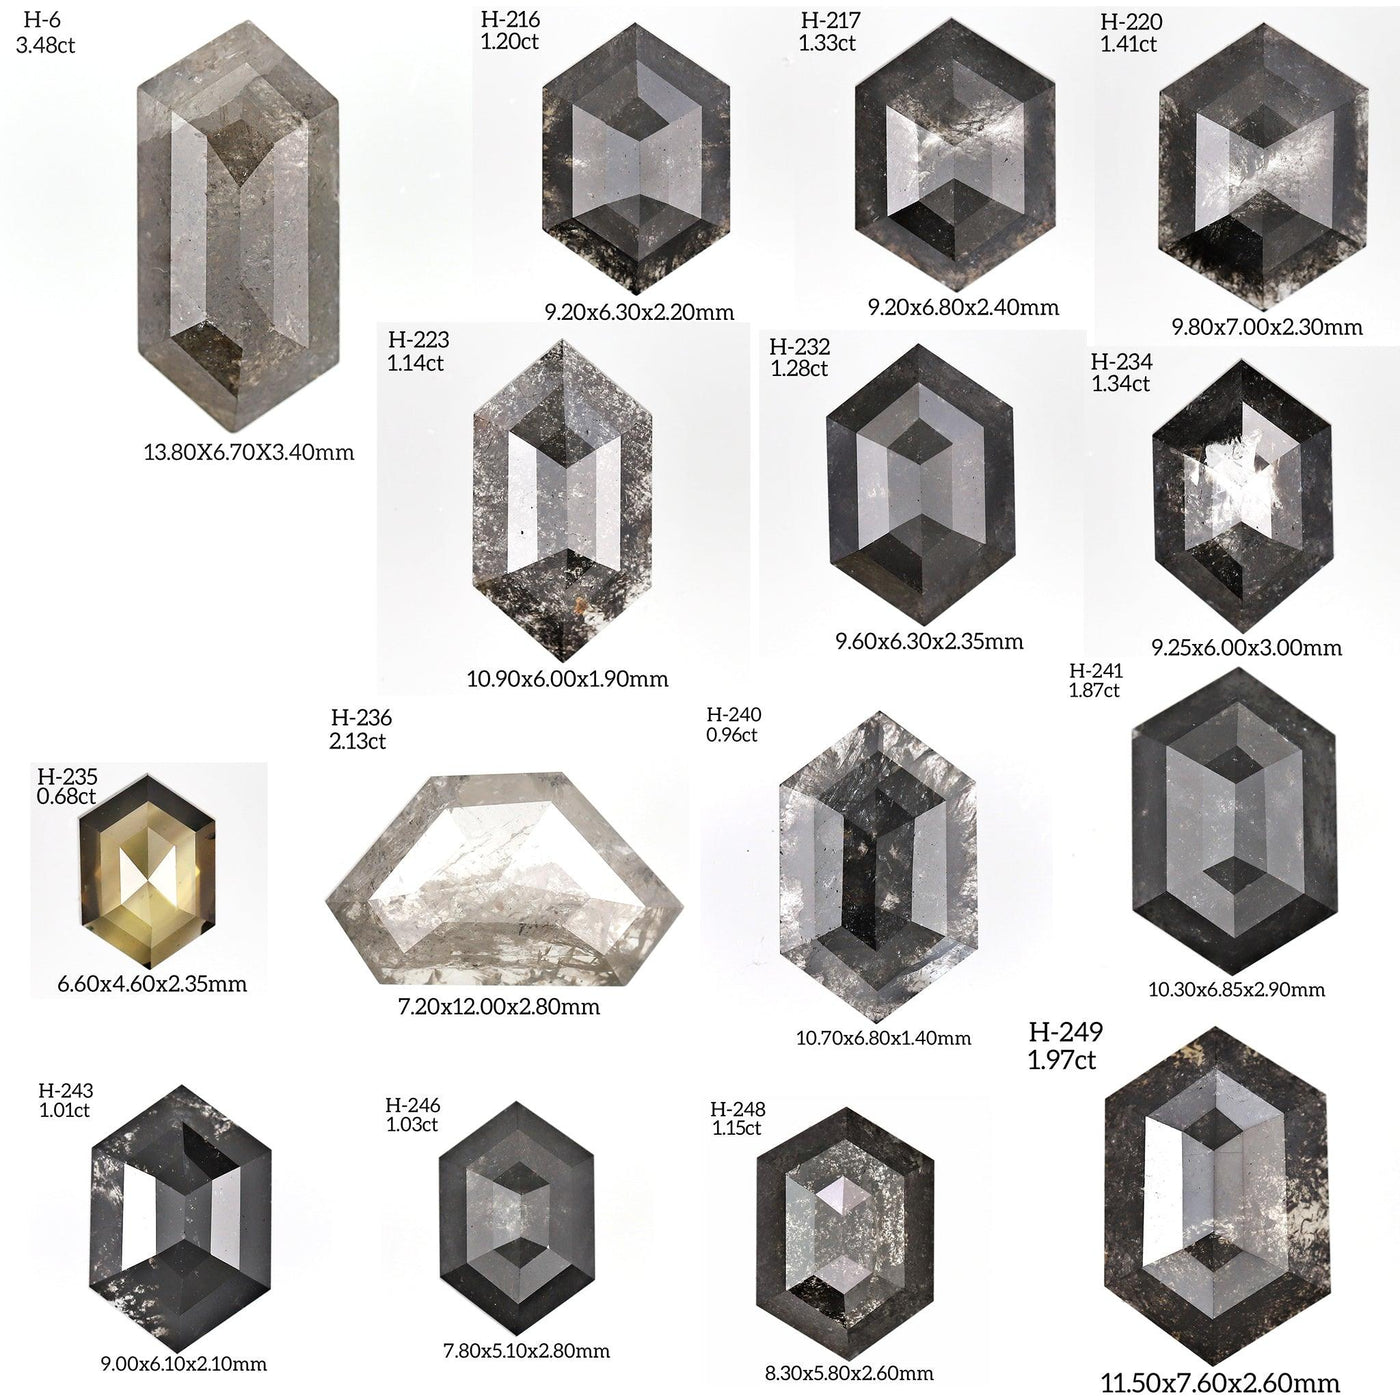 Salt and Pepper diamond Ring | Hexagon Diamond Ring | Engagement Ring - Rubysta